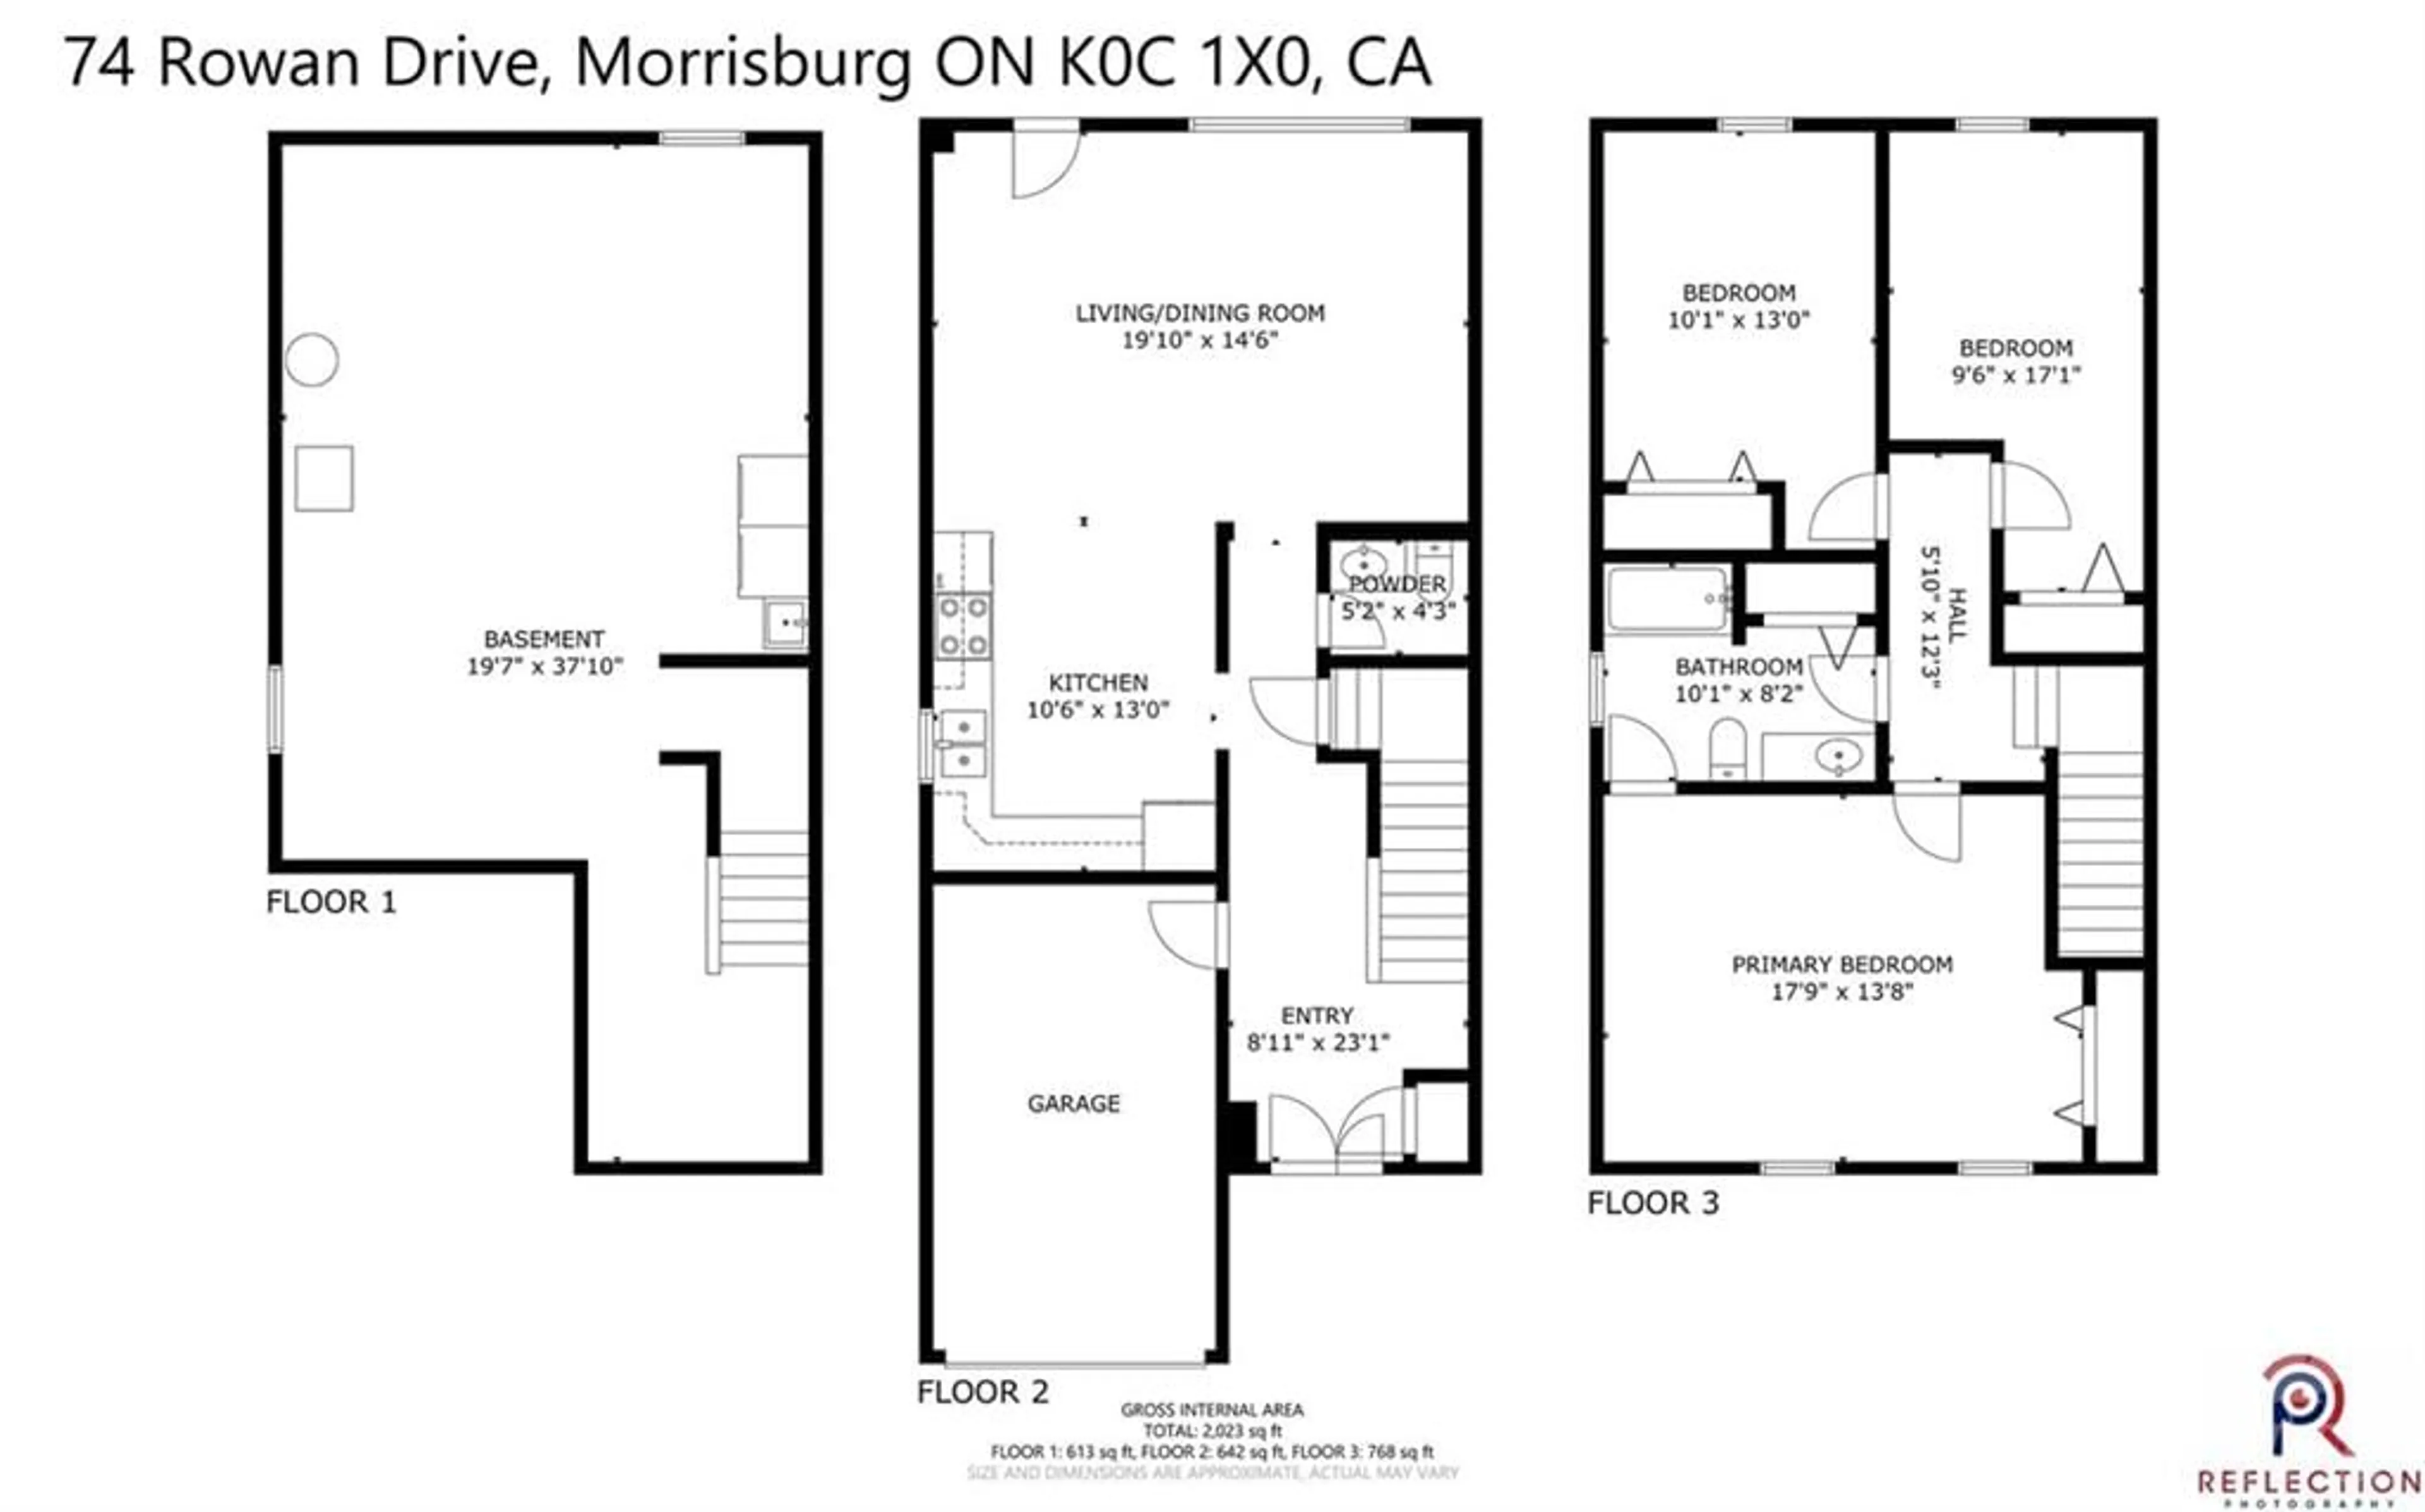 Floor plan for 74 ROWAN Dr, Morrisburg Ontario K0C 1X0